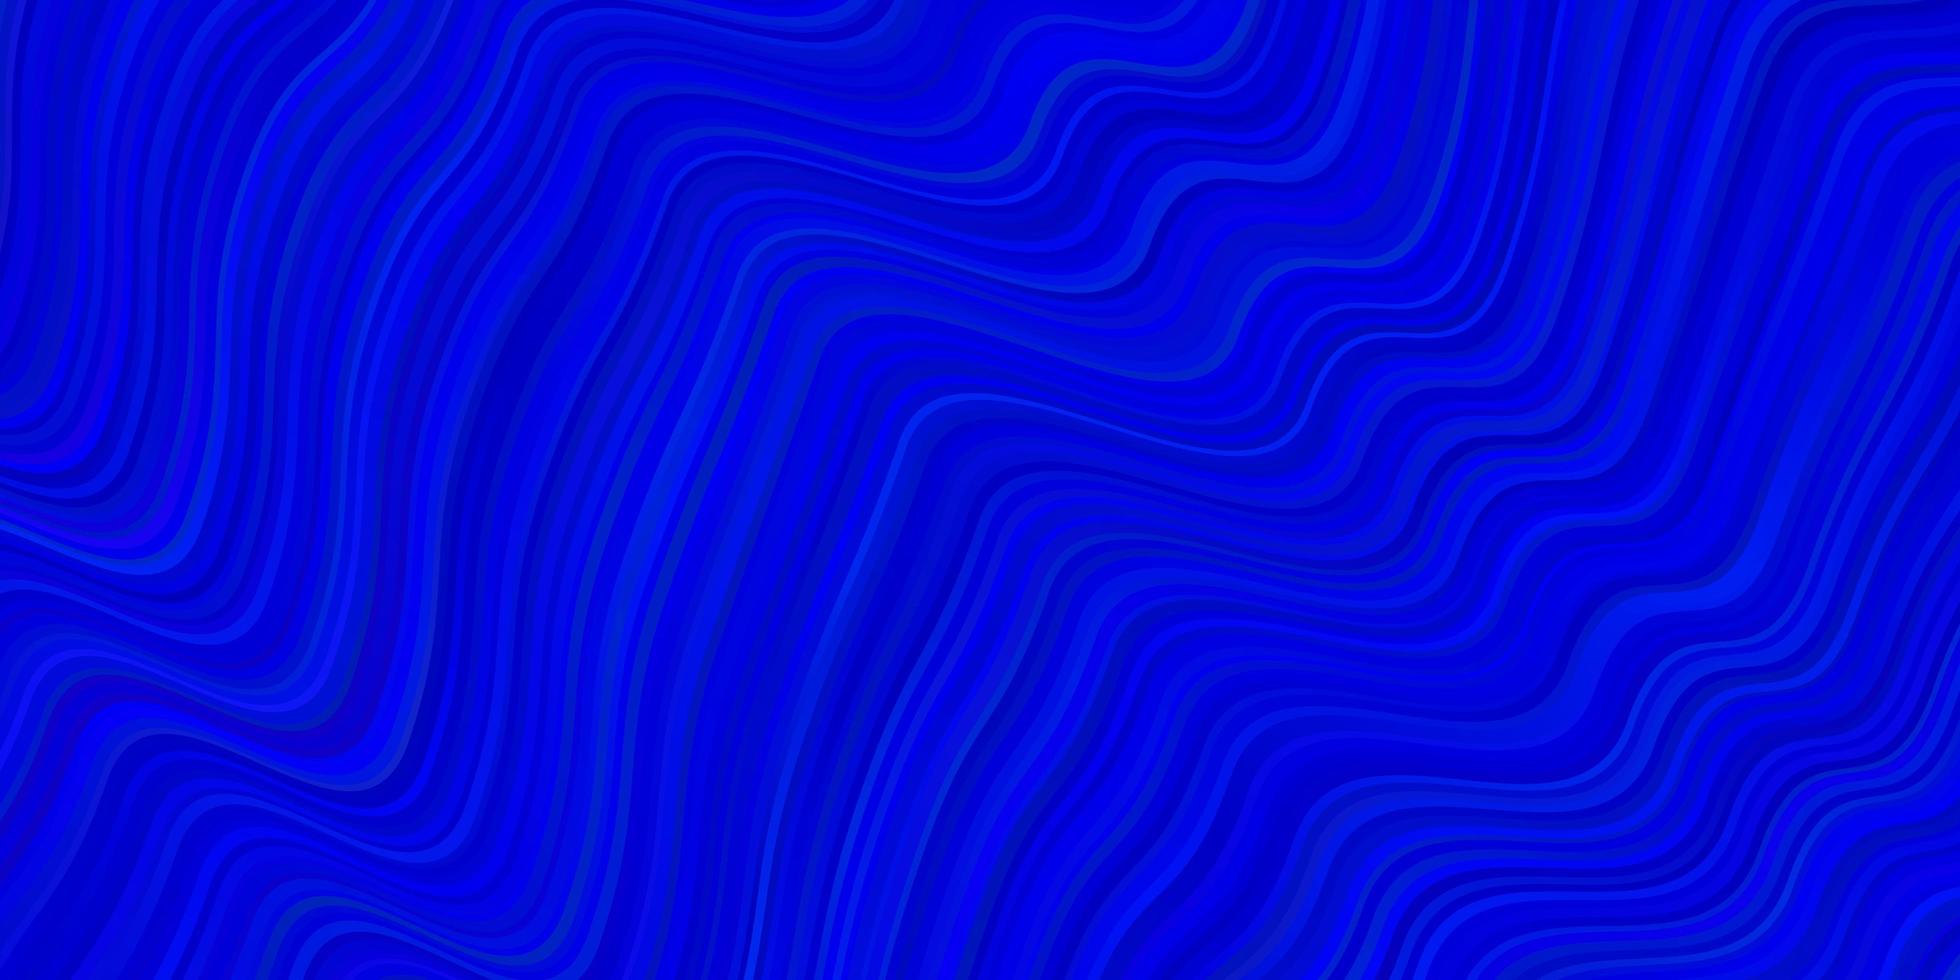 hellrosa blaue Vektorvorlage mit Linien vektor